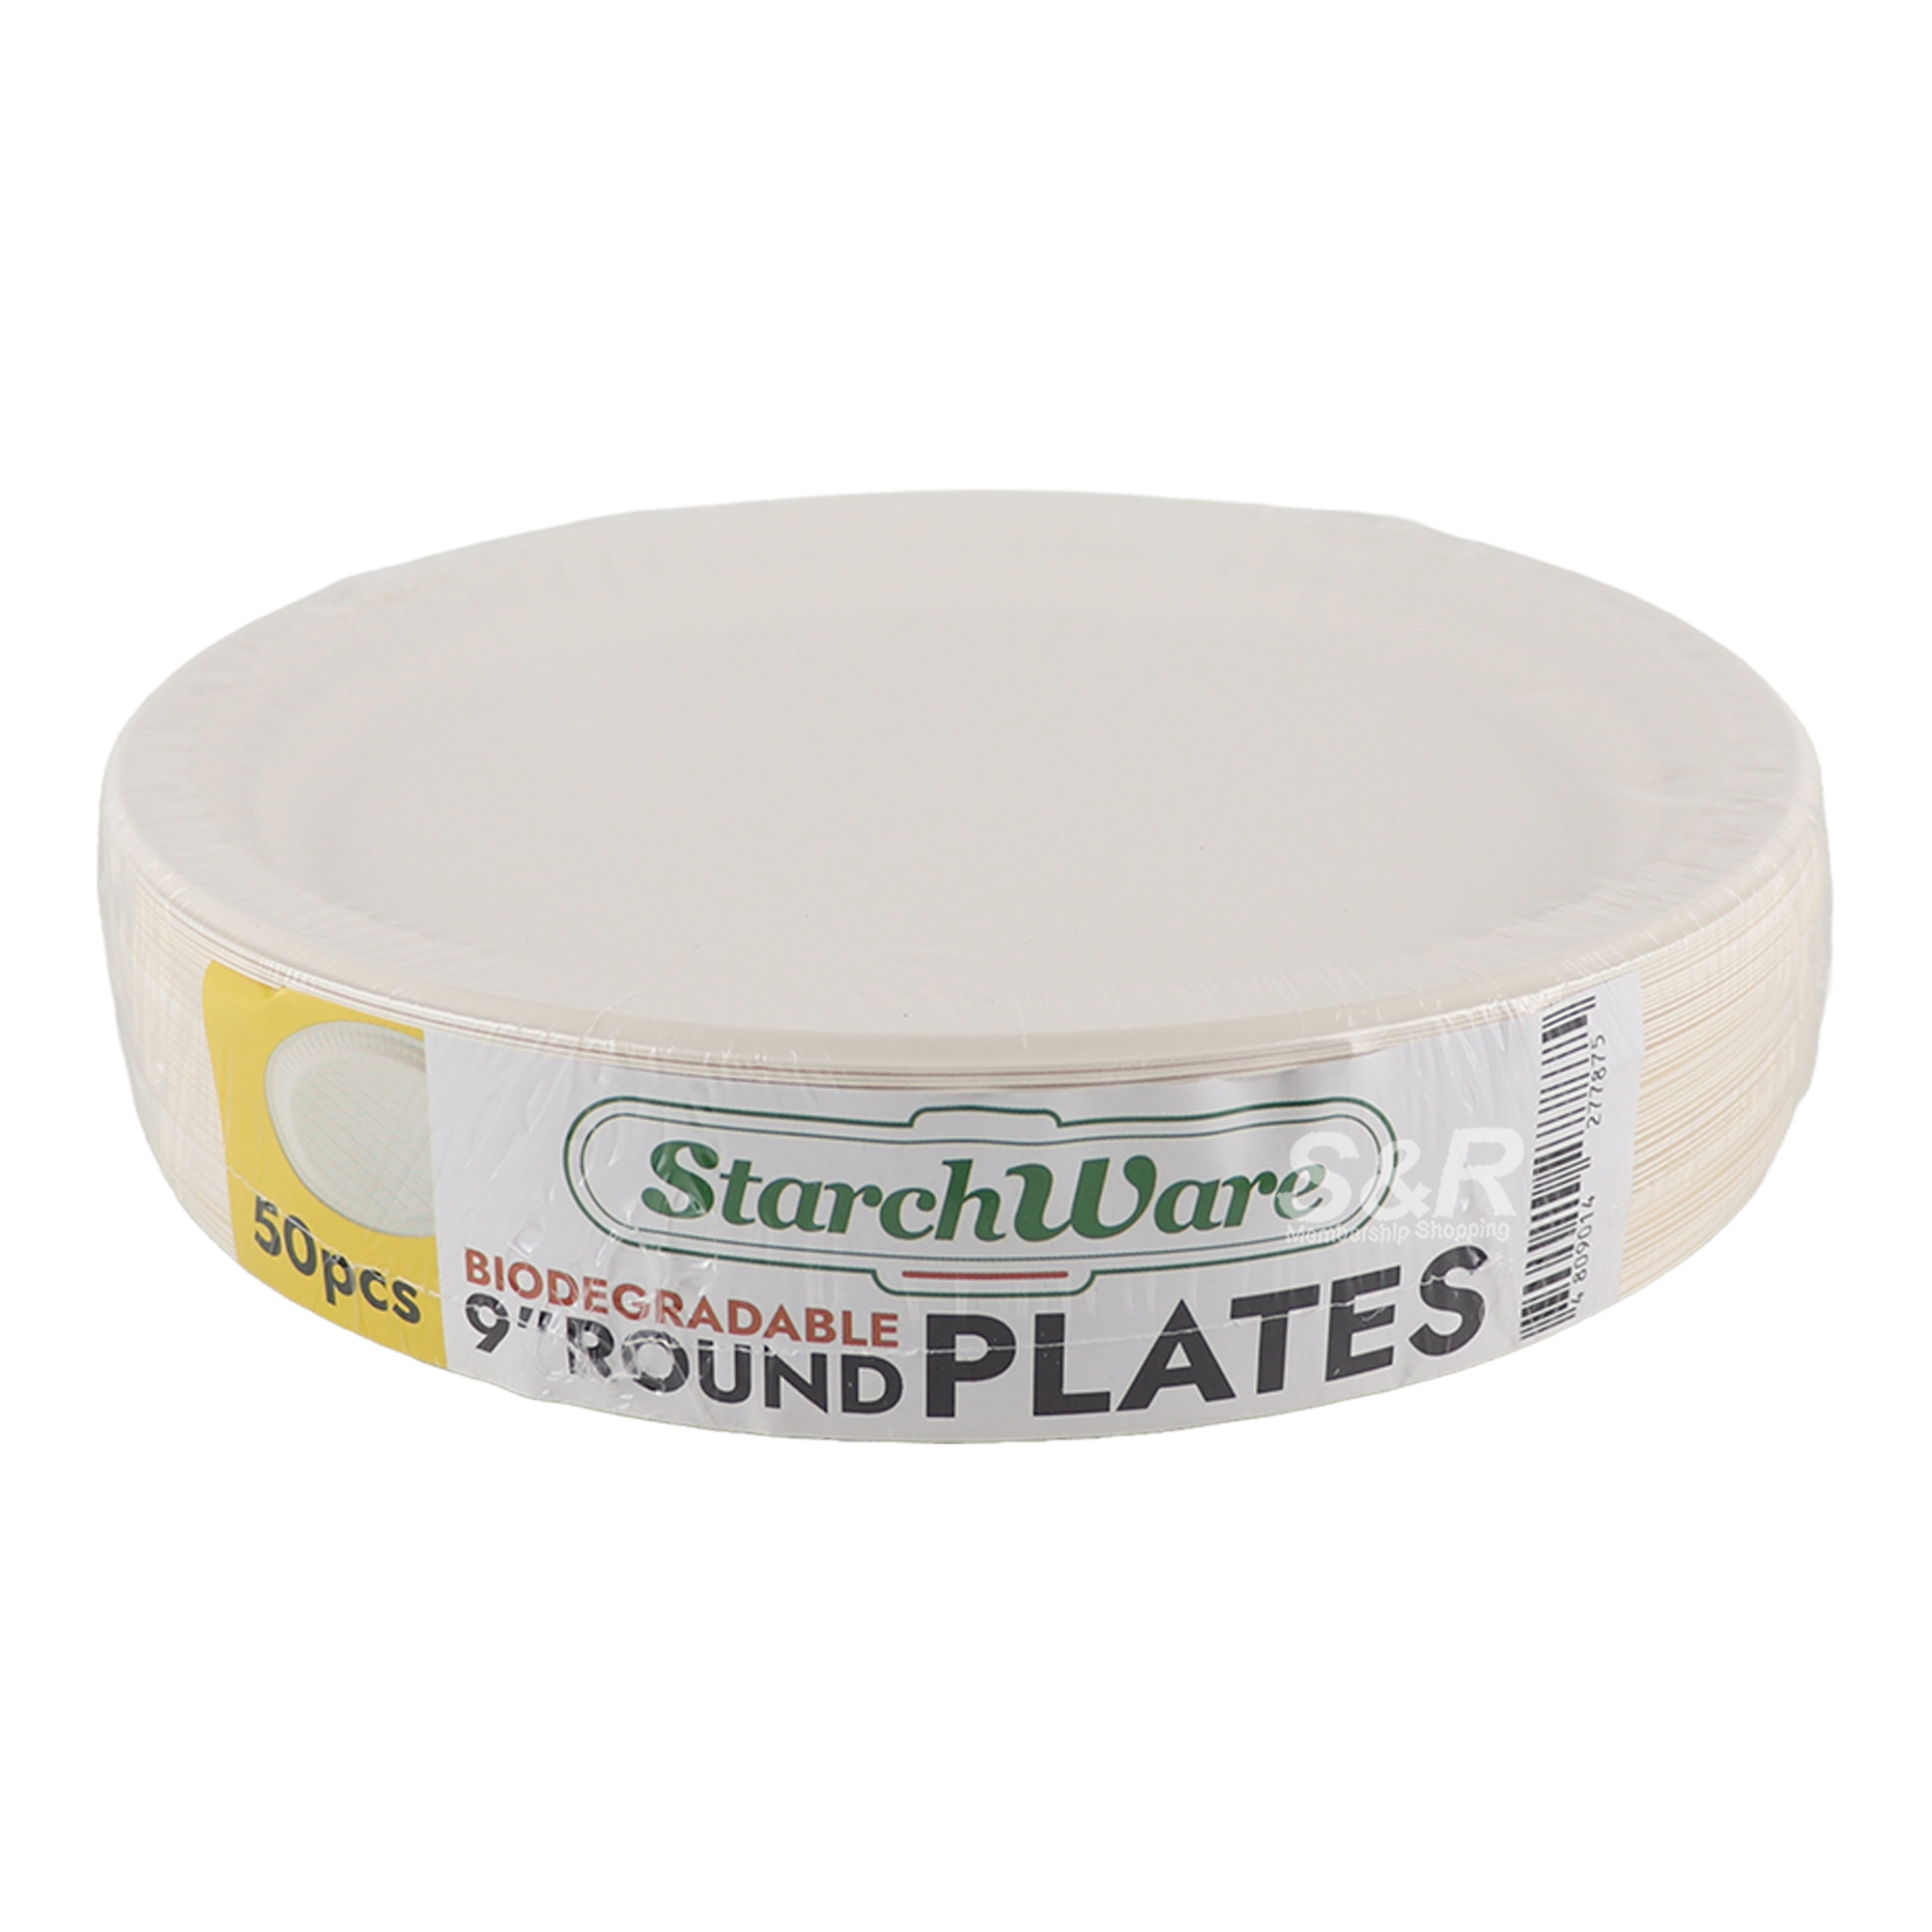 Starchware Biodegradable Round Disposable Plates 50pcs